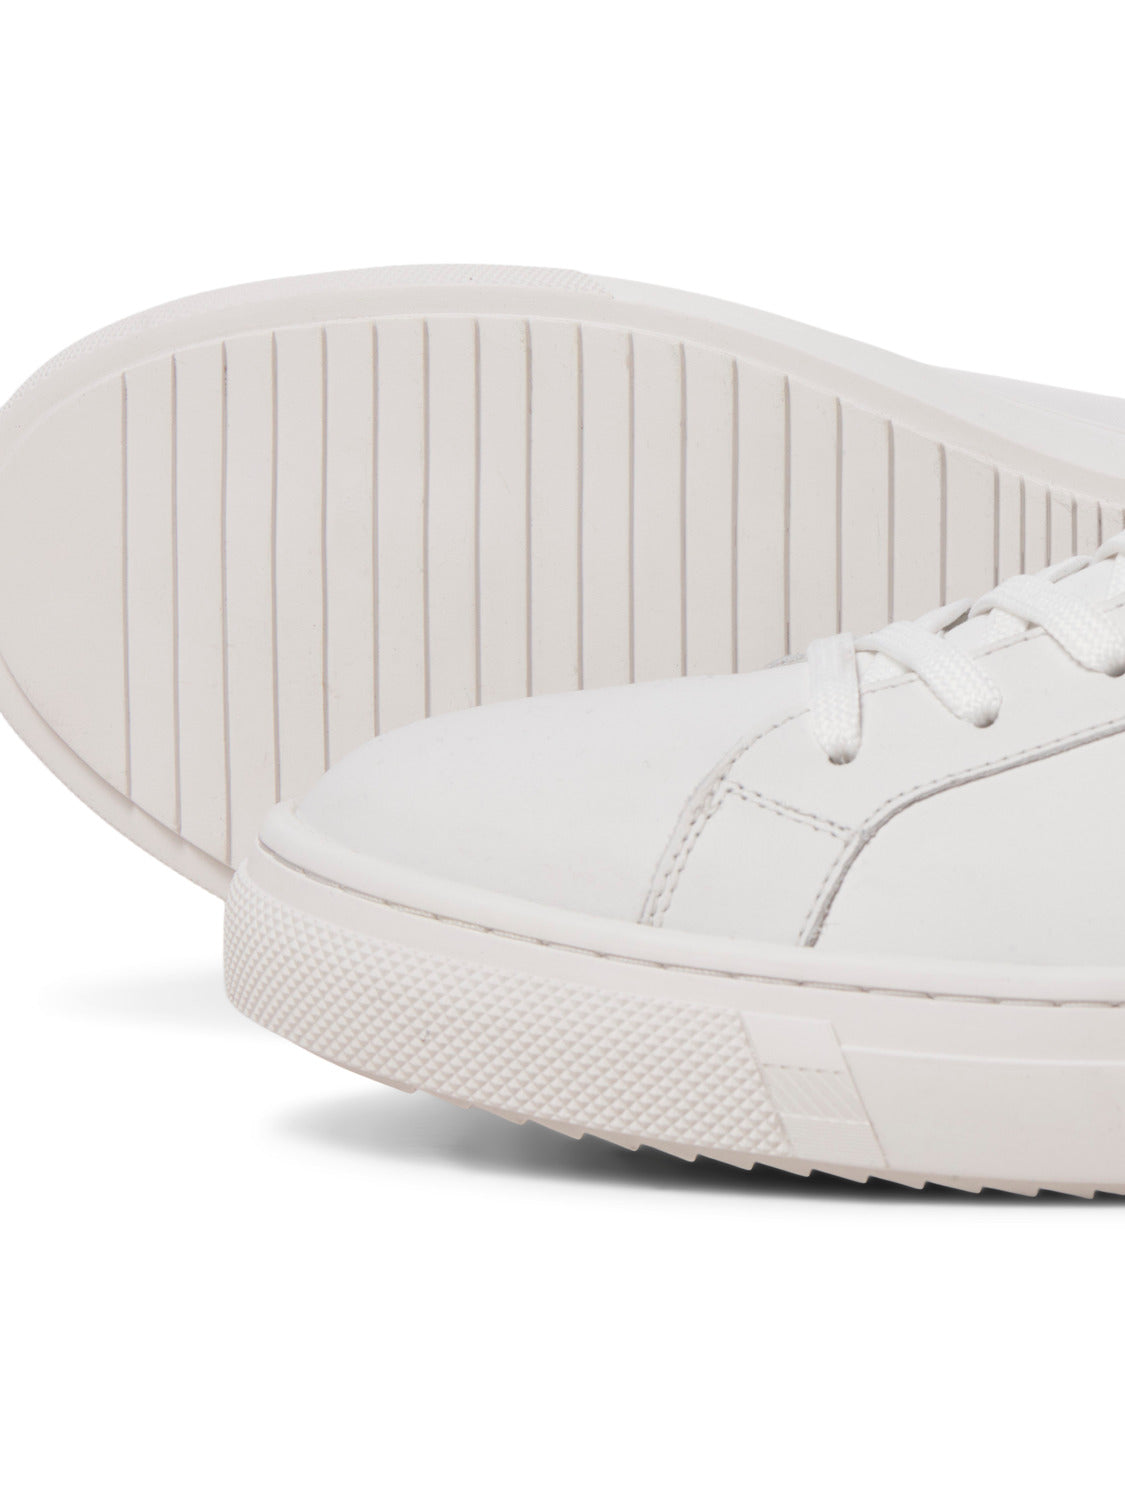 JFWRADCLIFFE Sneakers - White